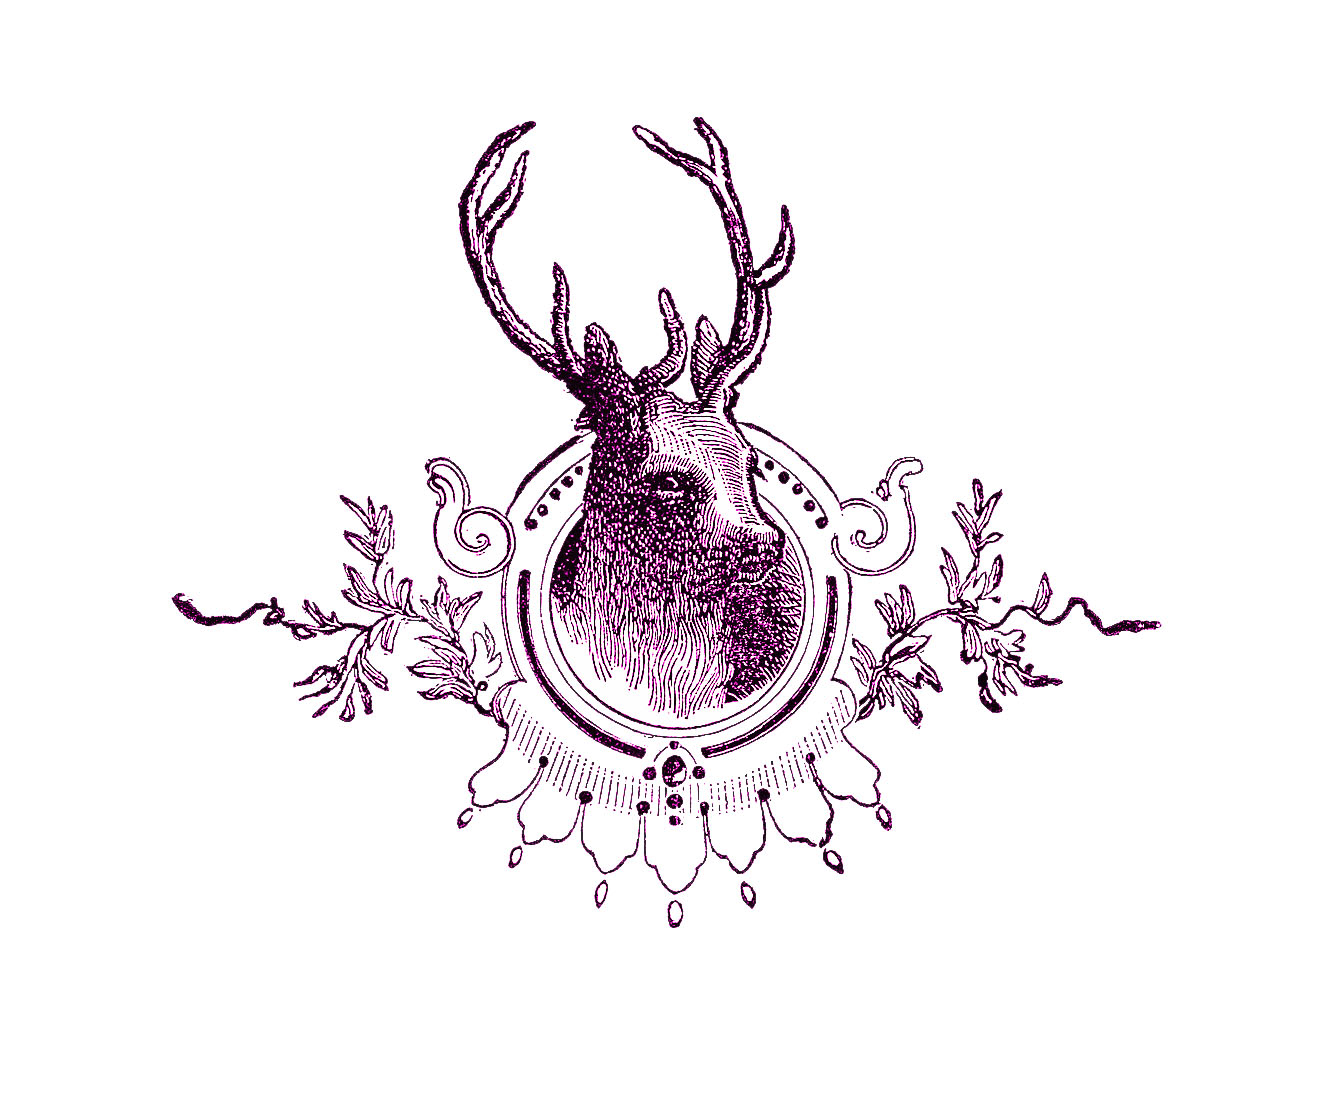 Vintage Christmas Image - Deer Head Engraving - The Graphics Fairy